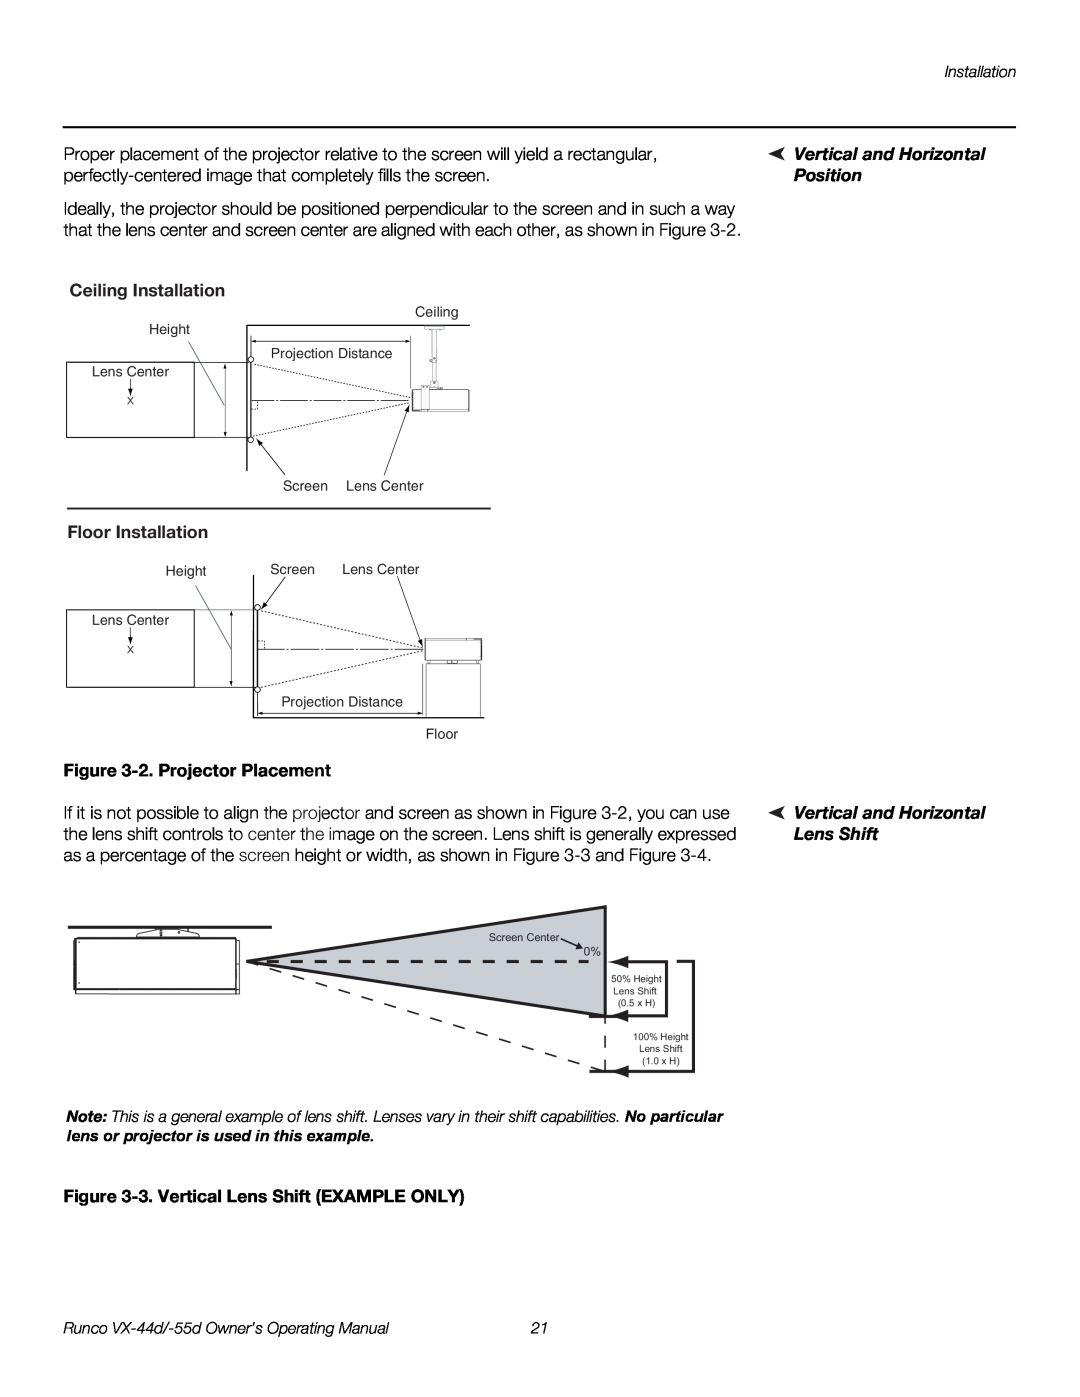 Runco VX-55D, VX-44D Ceiling Installation, Floor Installation, 2. Projector Placement, 3. Vertical Lens Shift EXAMPLE ONLY 